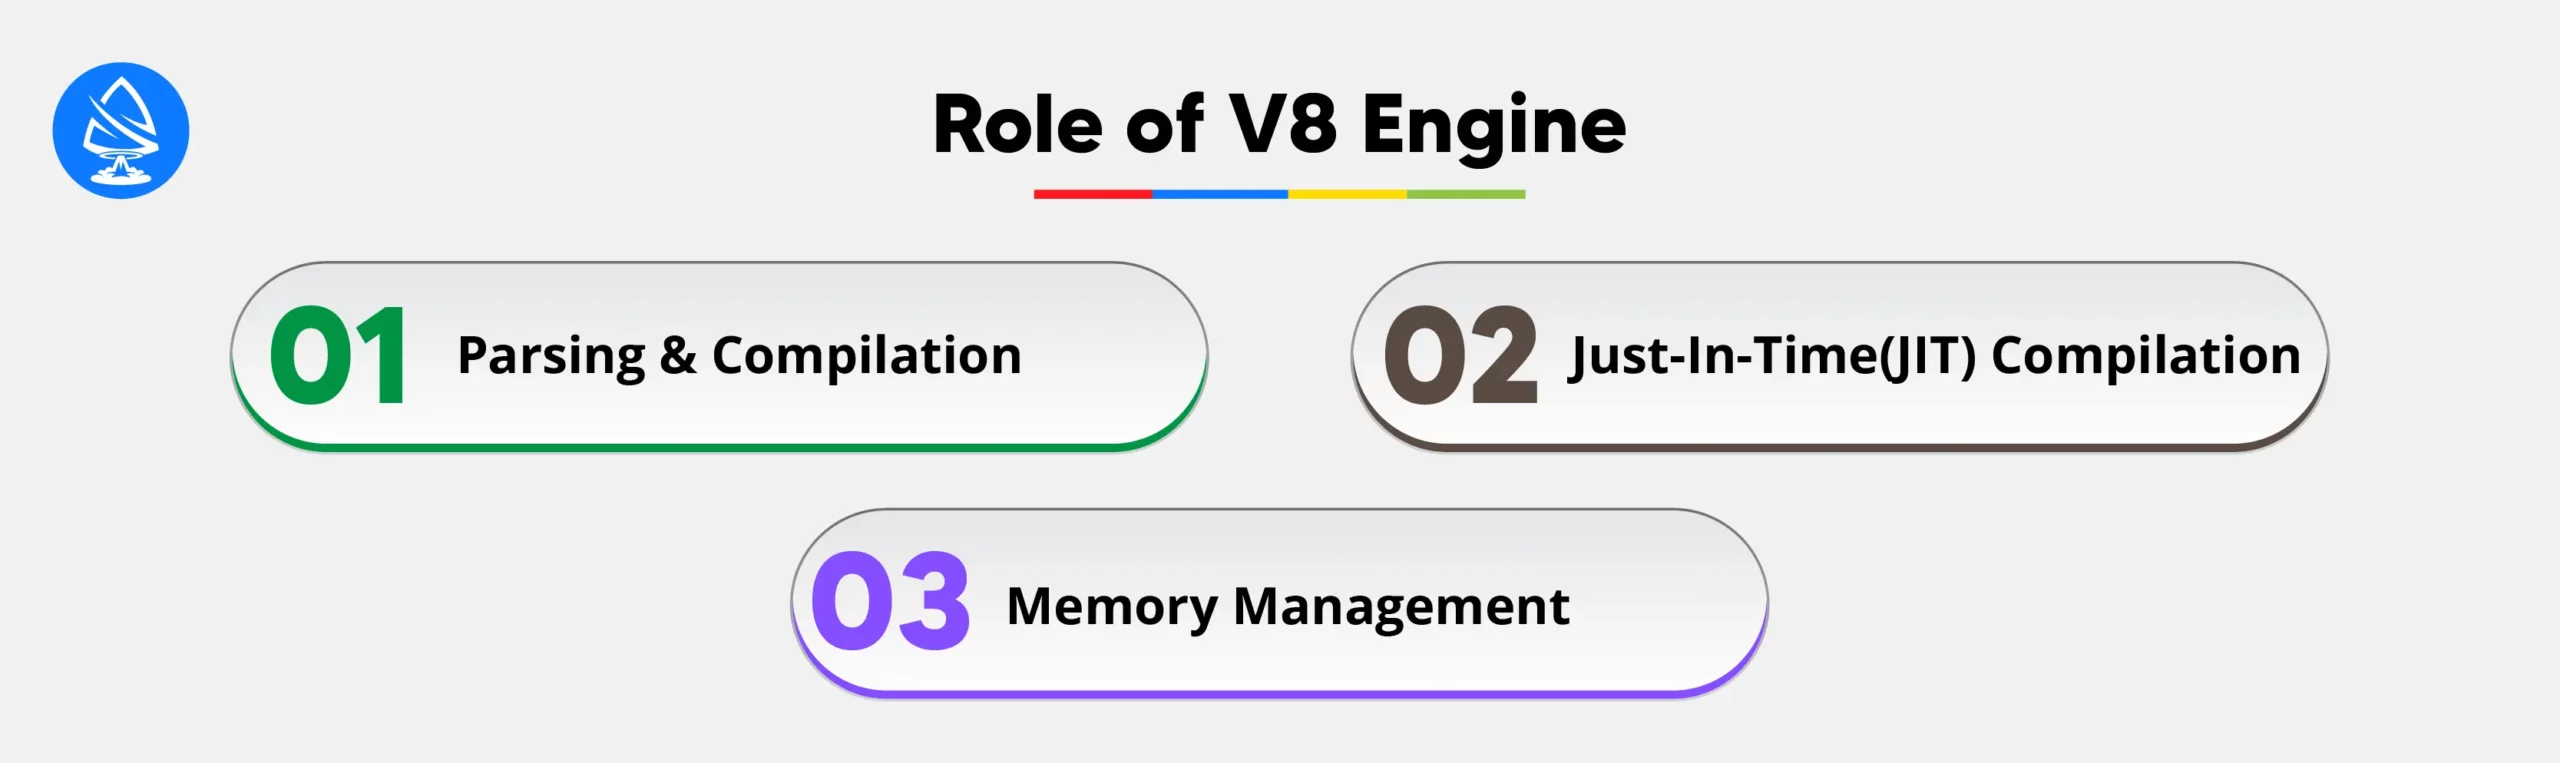 Role of V8 Engine 